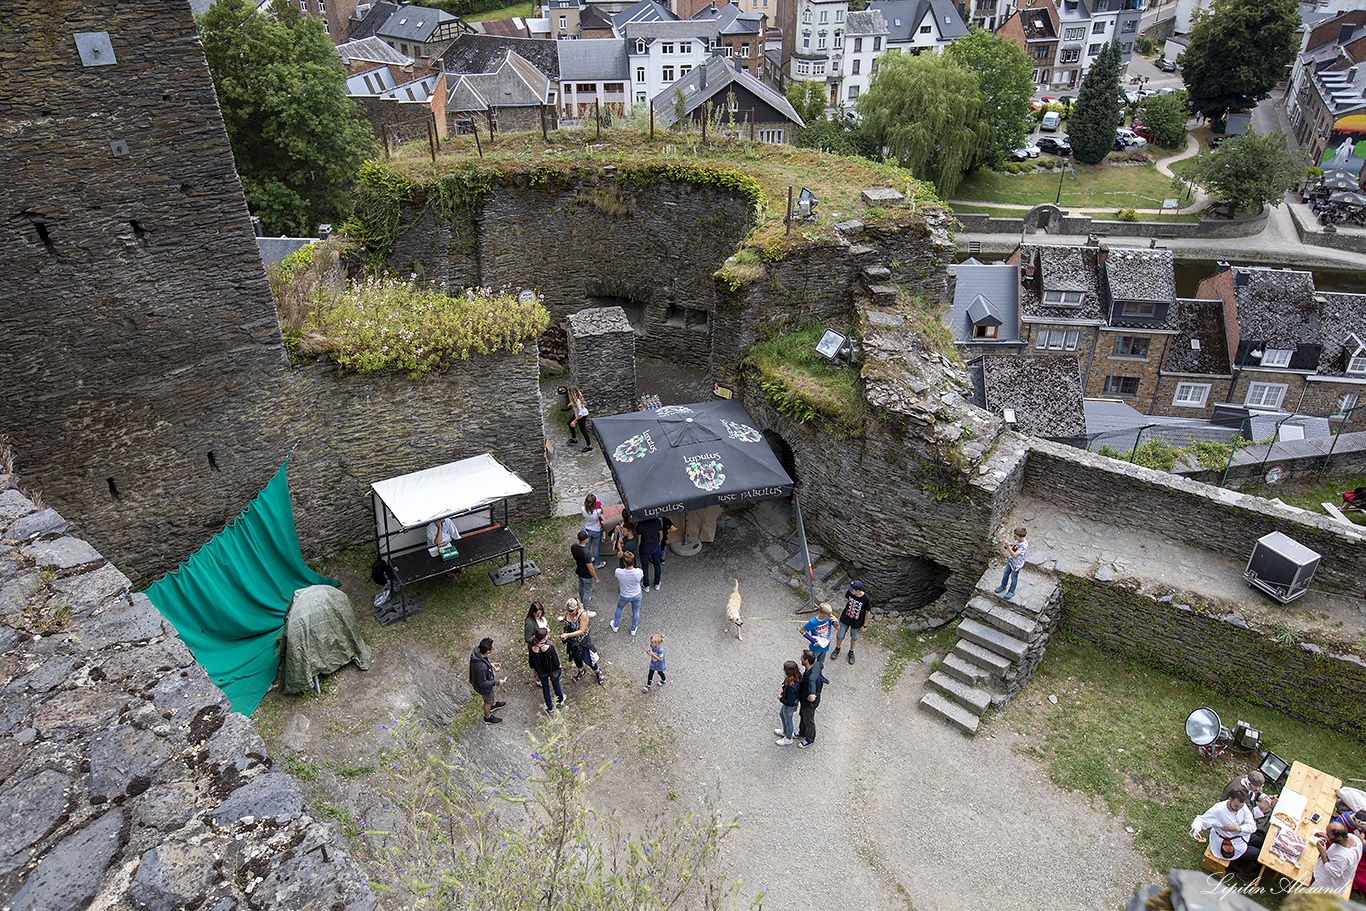 Феодальный замок Ла-Рош-Ан-Арденн (The Feudal Castle of La Roche-en-Ardenne)  - Ла-Рош-ан-Арден (La Roche-en-Ardenne)